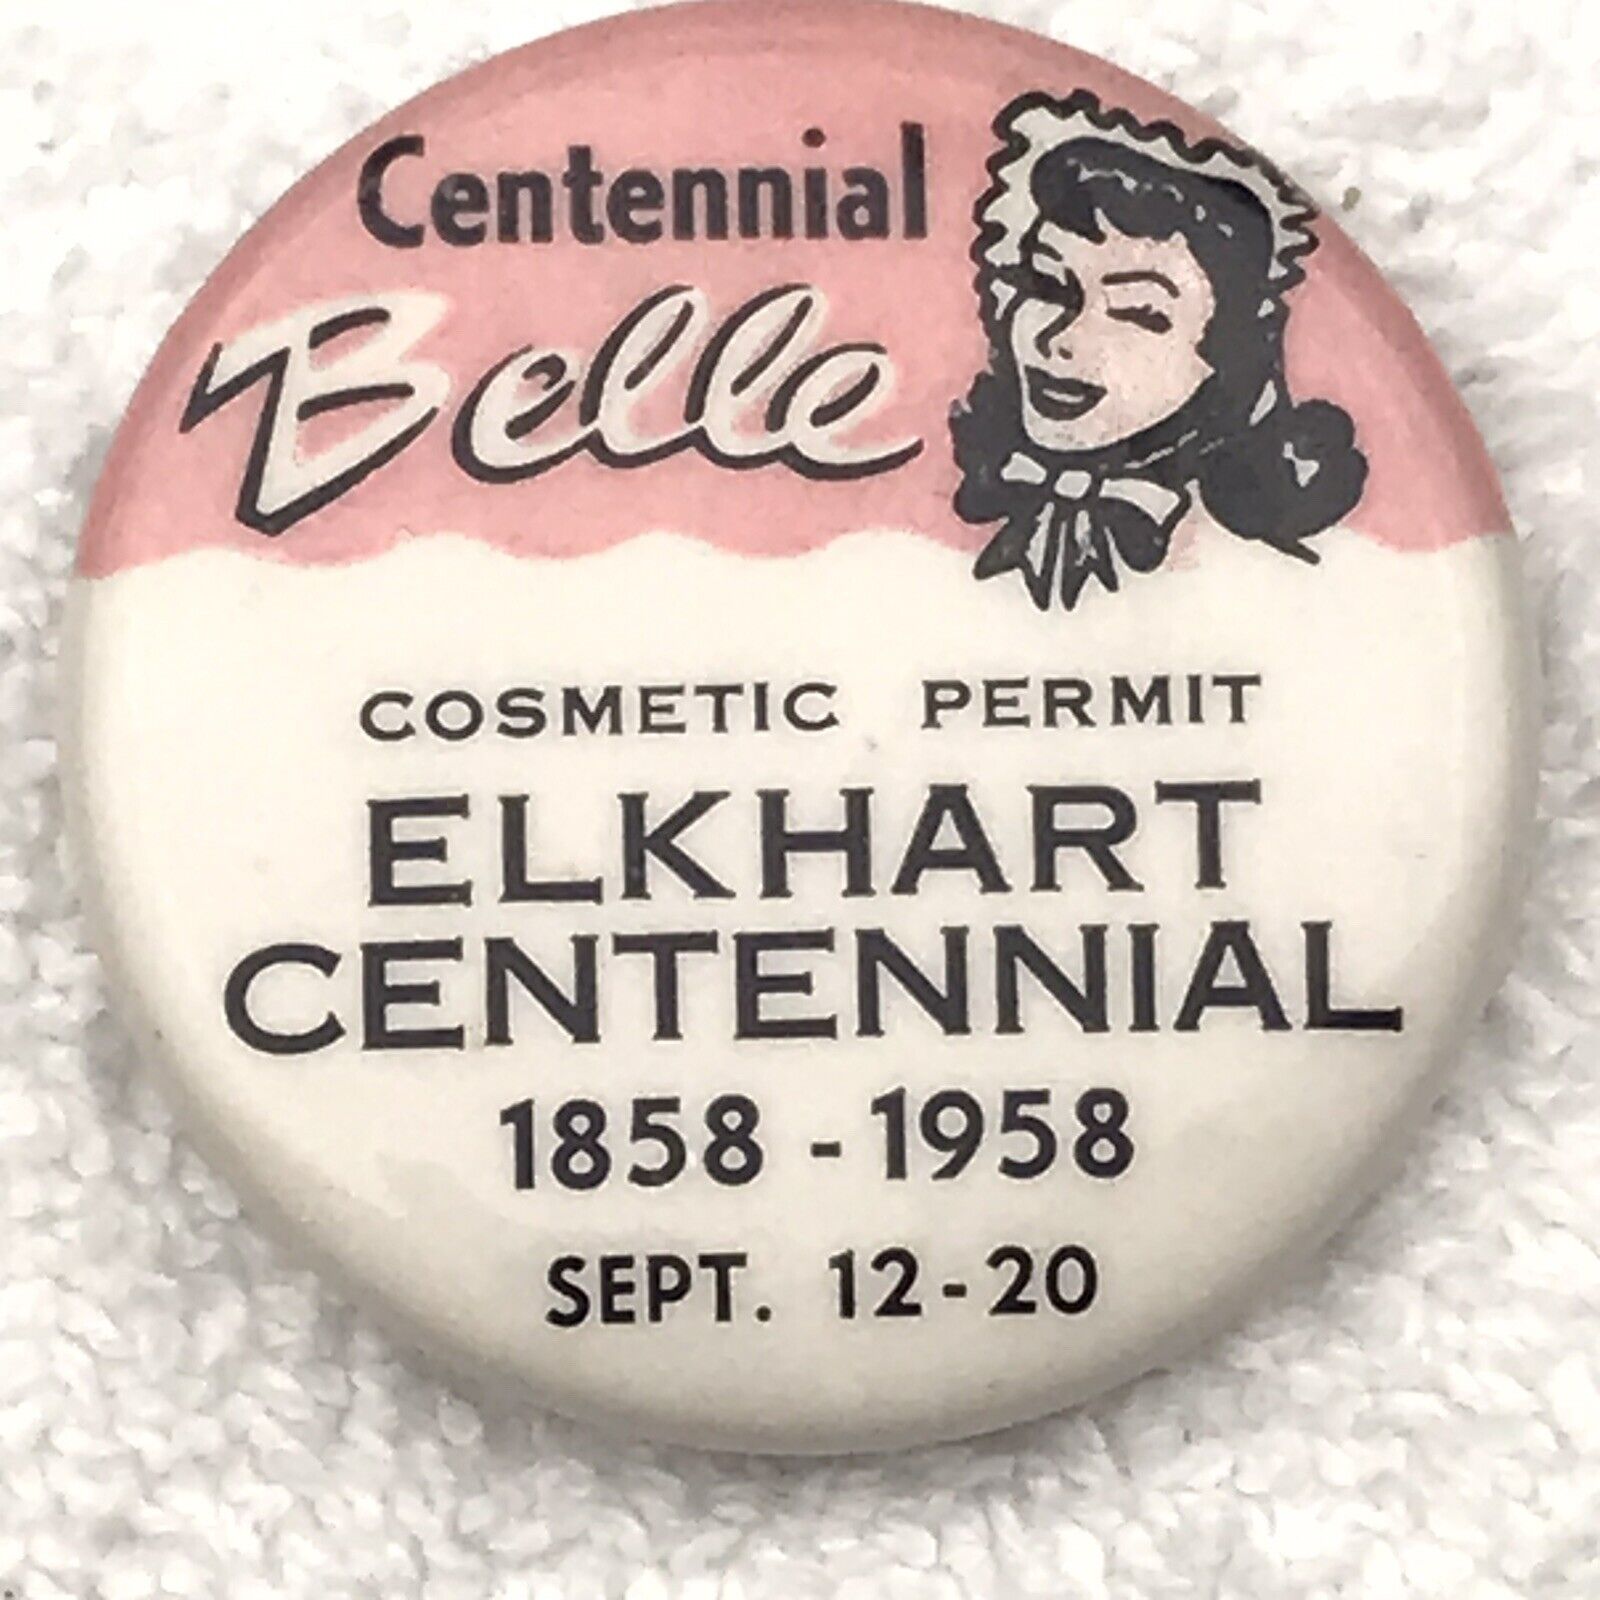 Elkhart Centennial 1958 Pin Button Vintage Pinback 50s Belle Cosmetic Permit